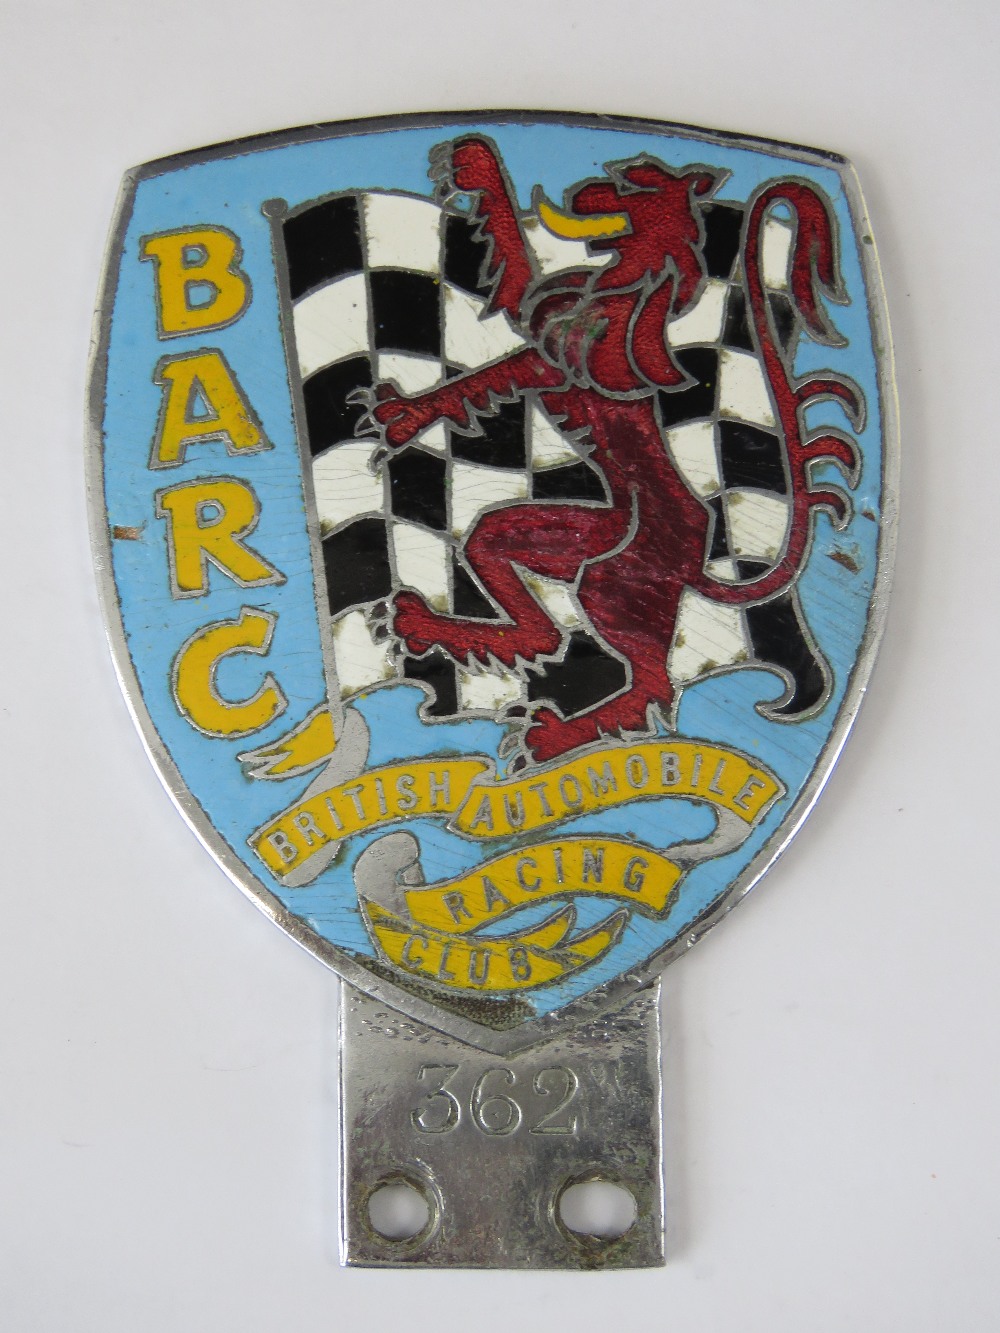 British Automobile Racing club, Goodwood